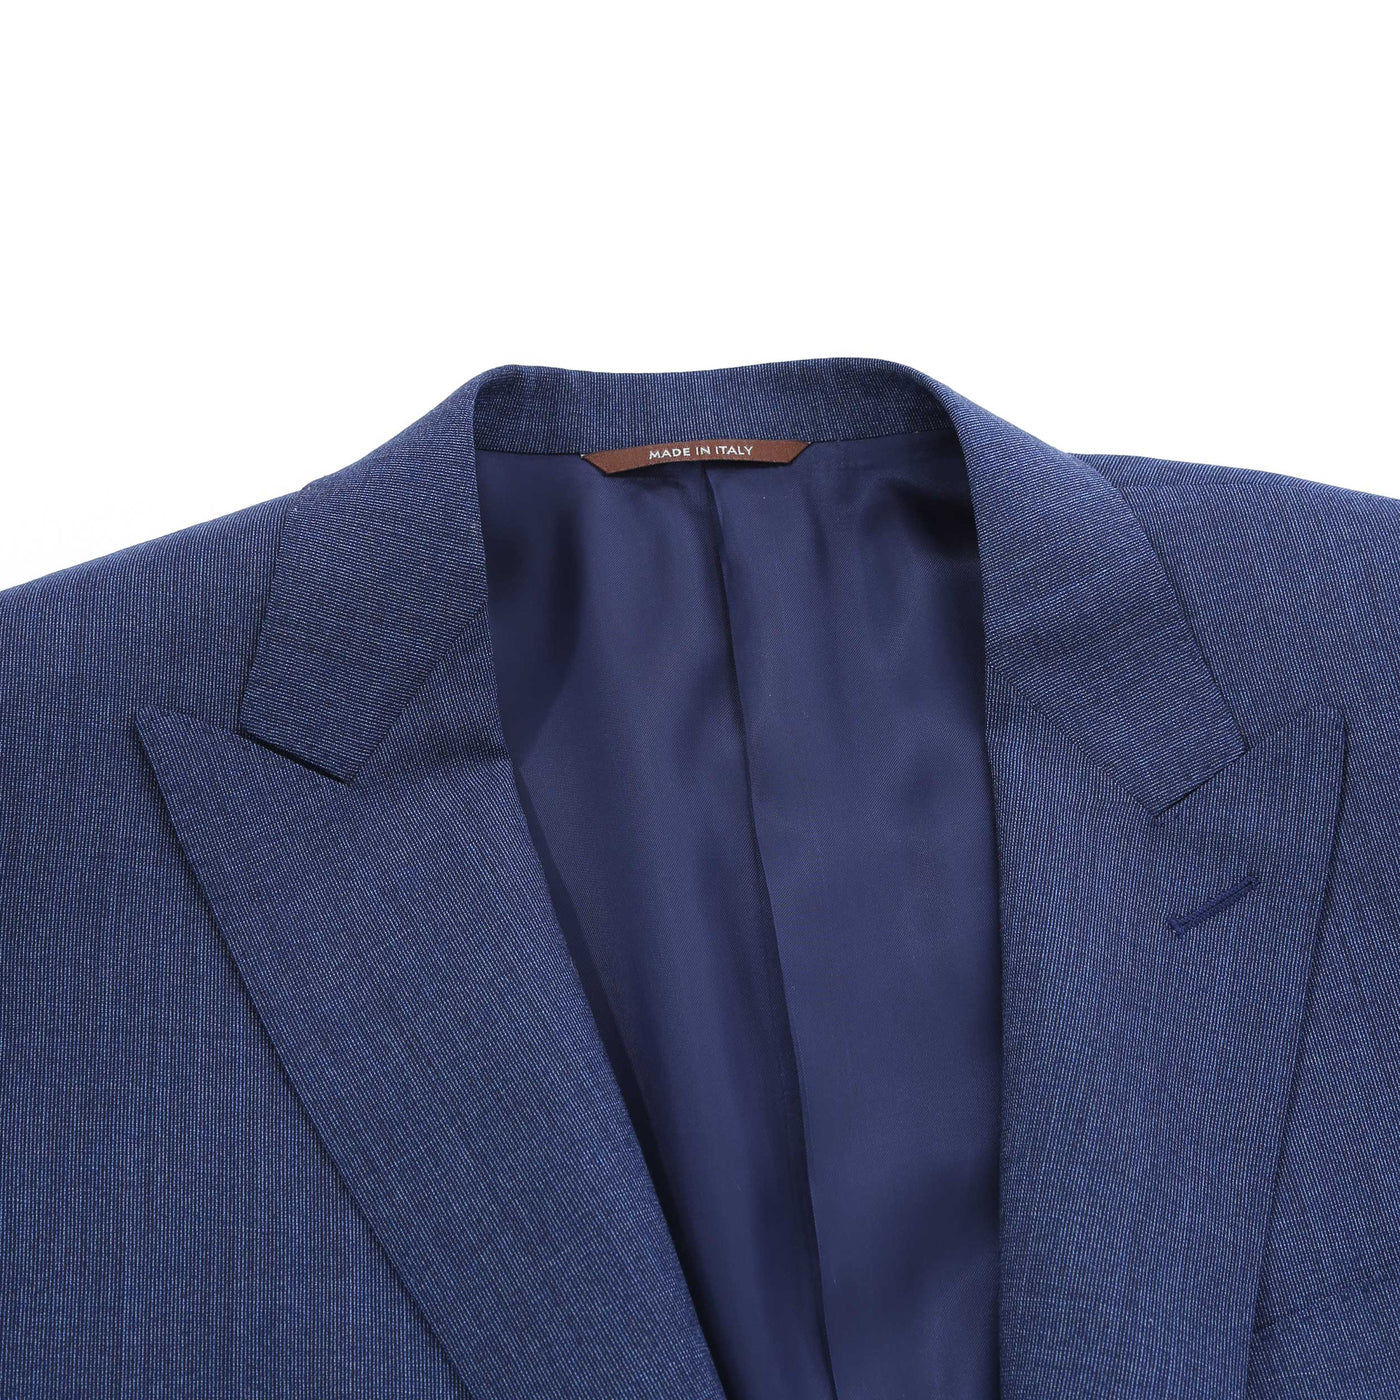 Canali Peak Lapel Stretch Suit in Denim Blue Lapels